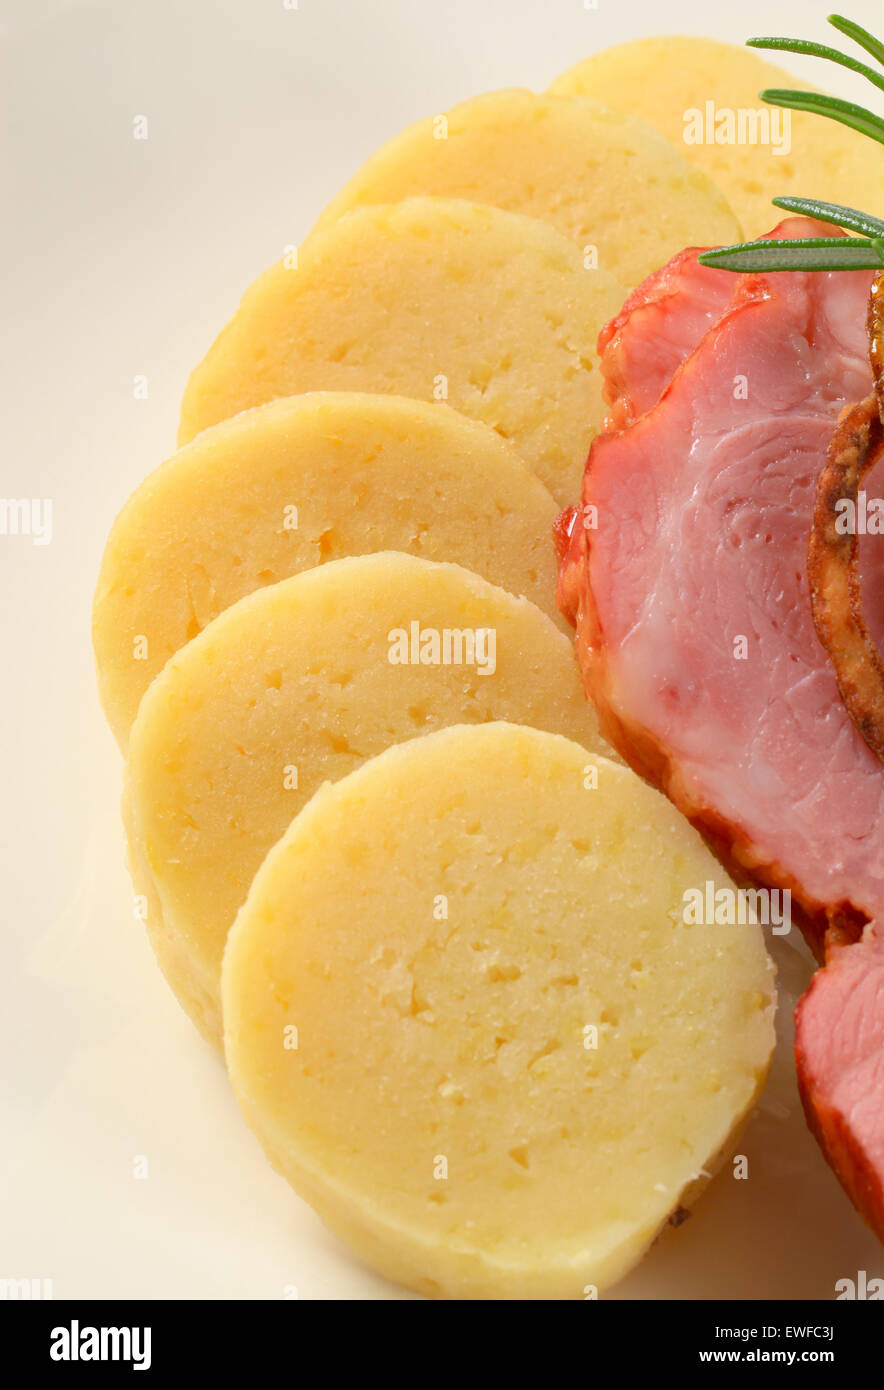 Smoked pork meat with potato dumplings Stock Photo